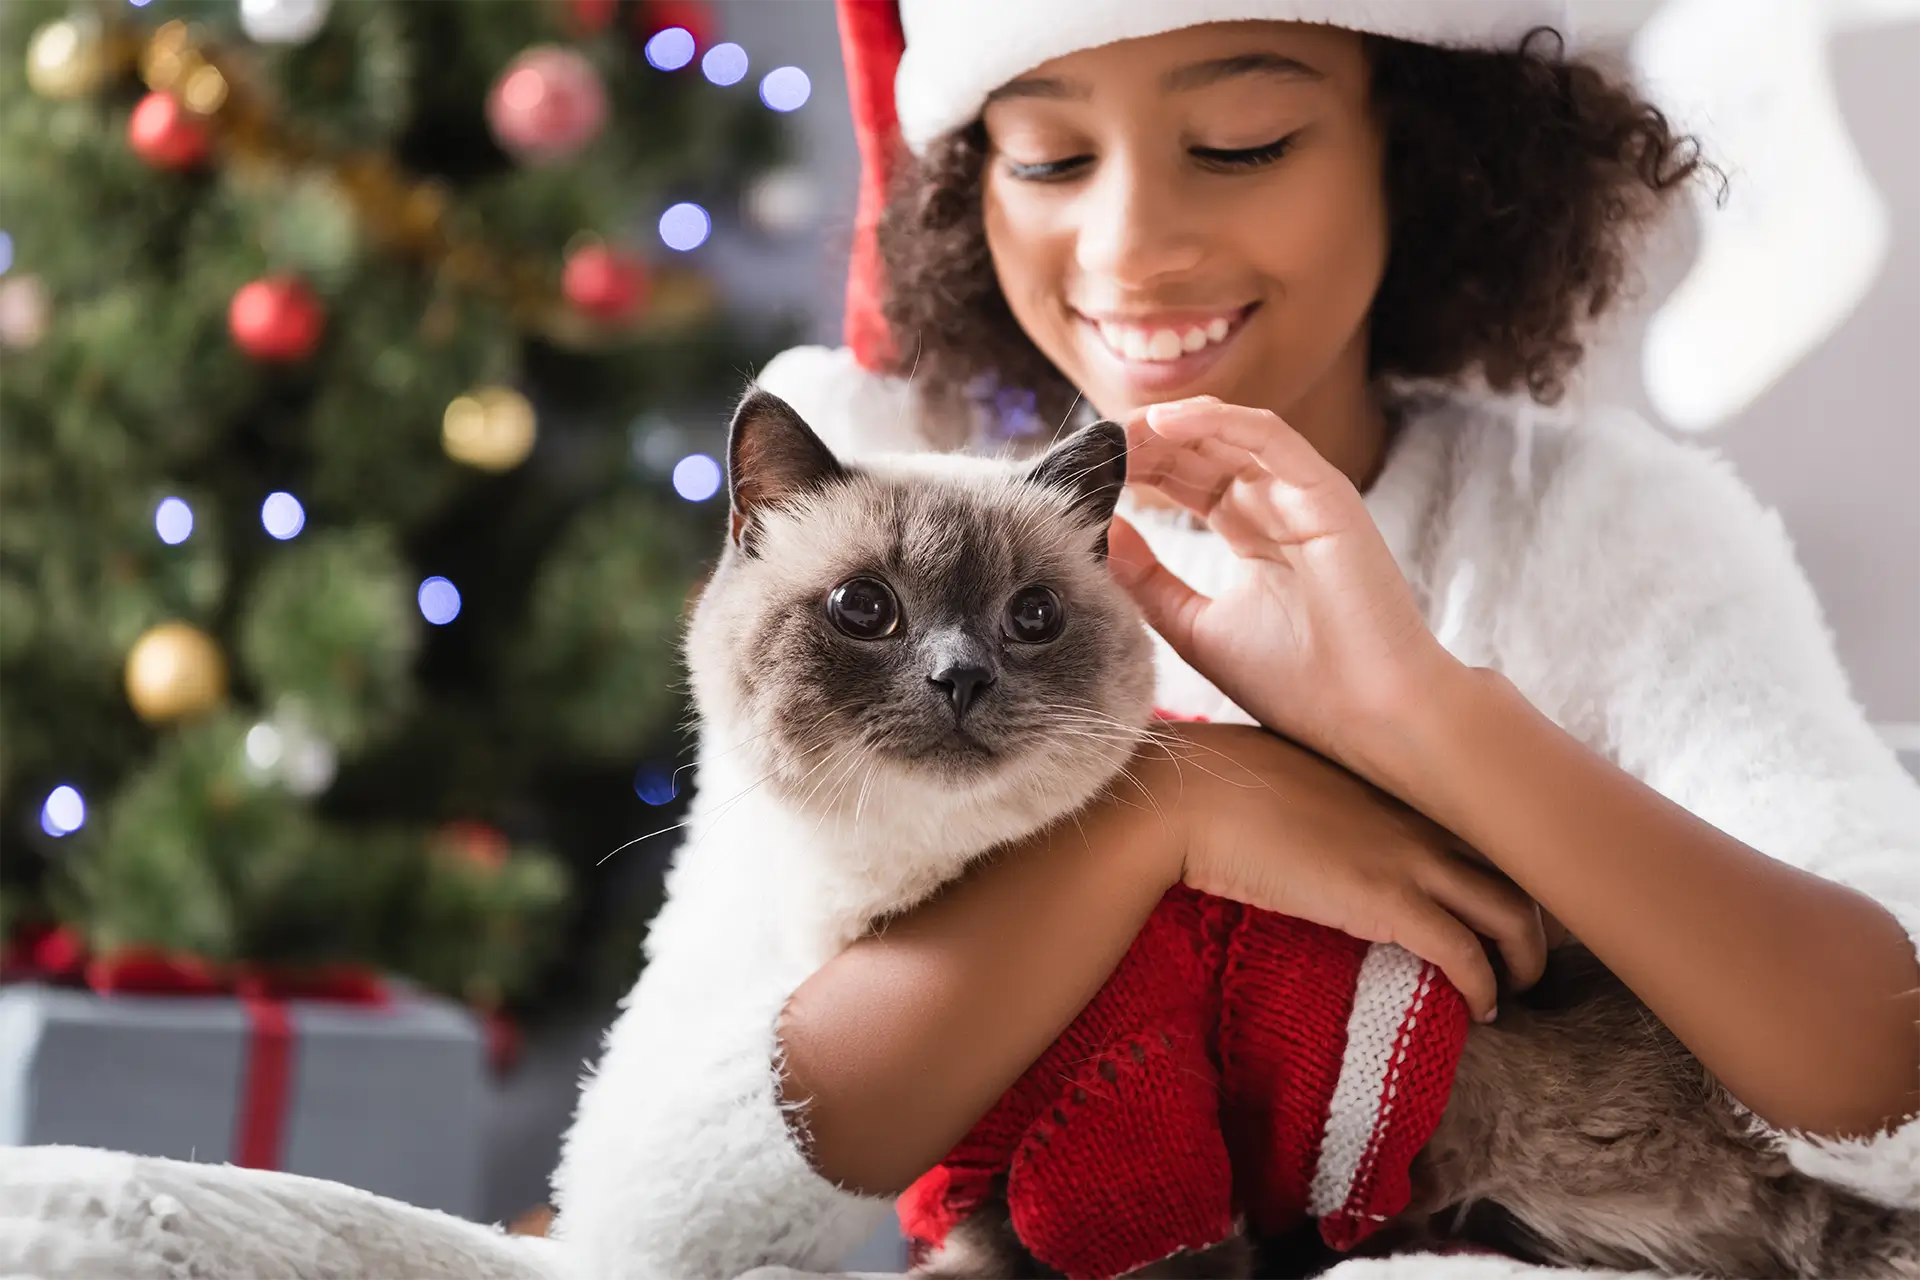 Young girl wearing Santa hat petting cat.